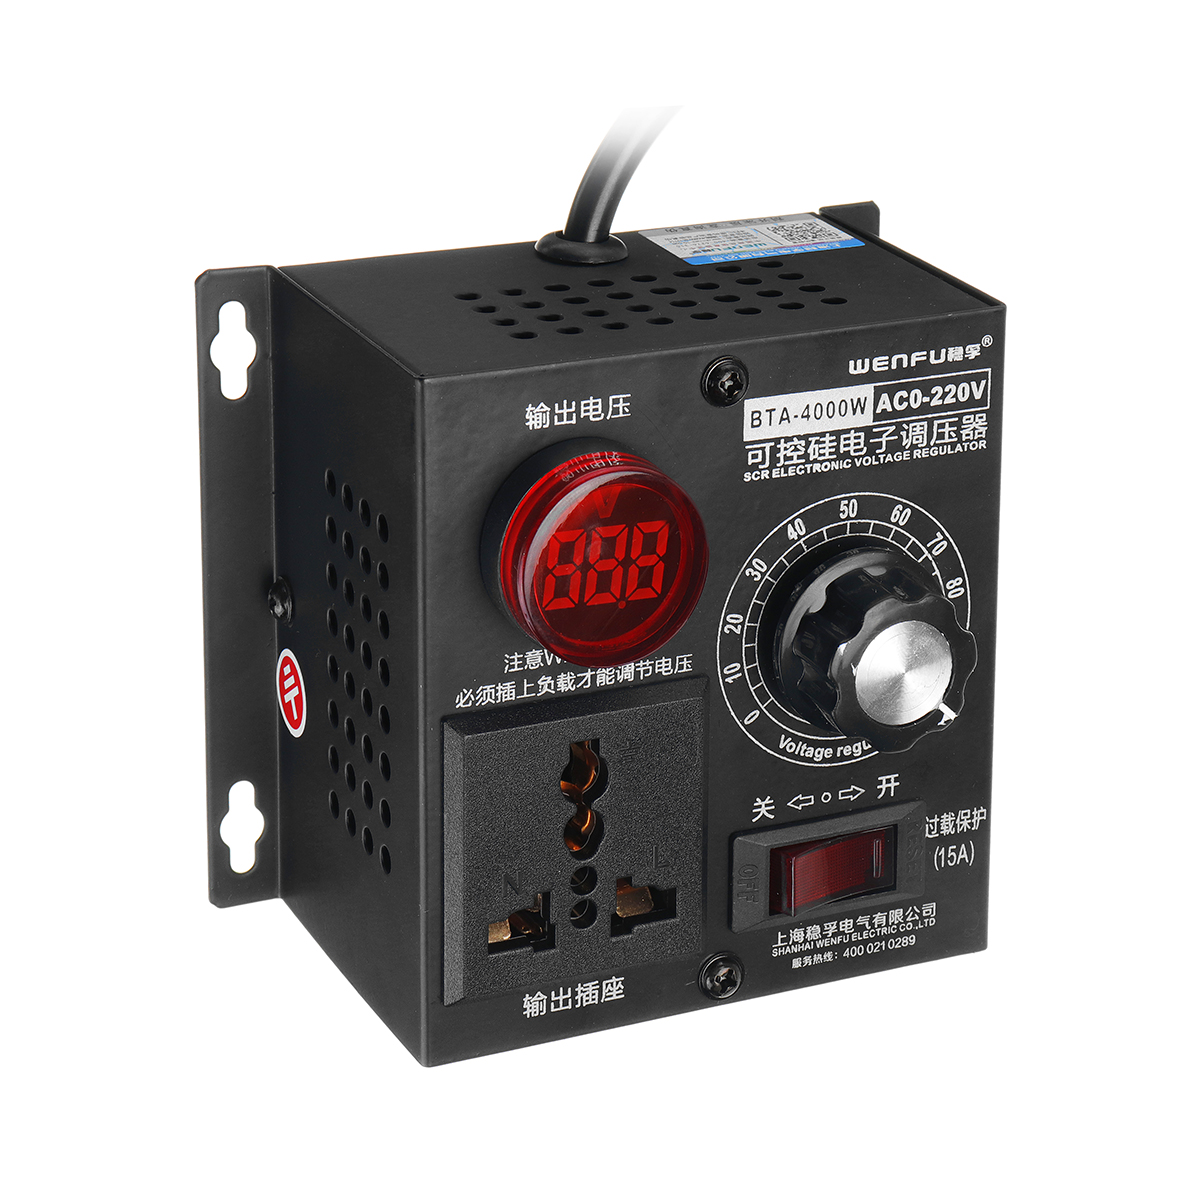 AC-220V-4000W-Variable-Voltage-Regulator-Step-Down-Voltage-Converter-Transformer-Motor-Speed-Fan-Con-1419606-7